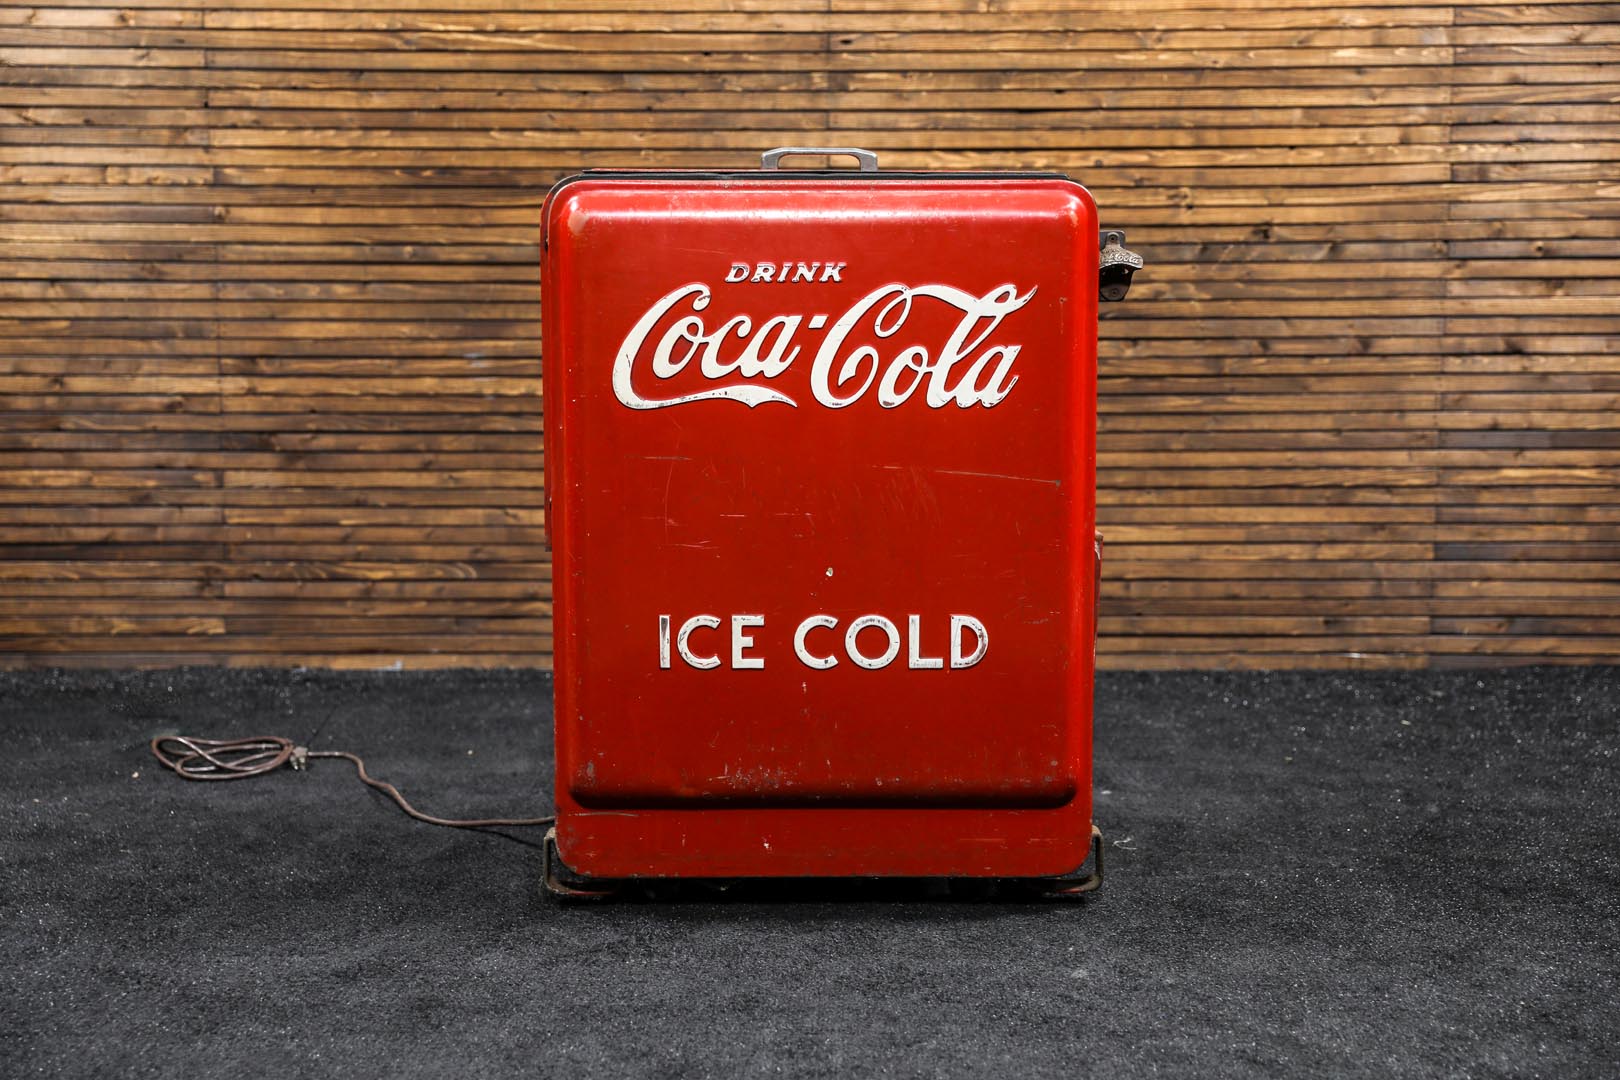 1940s Vintage Waterbath Coke Cooler